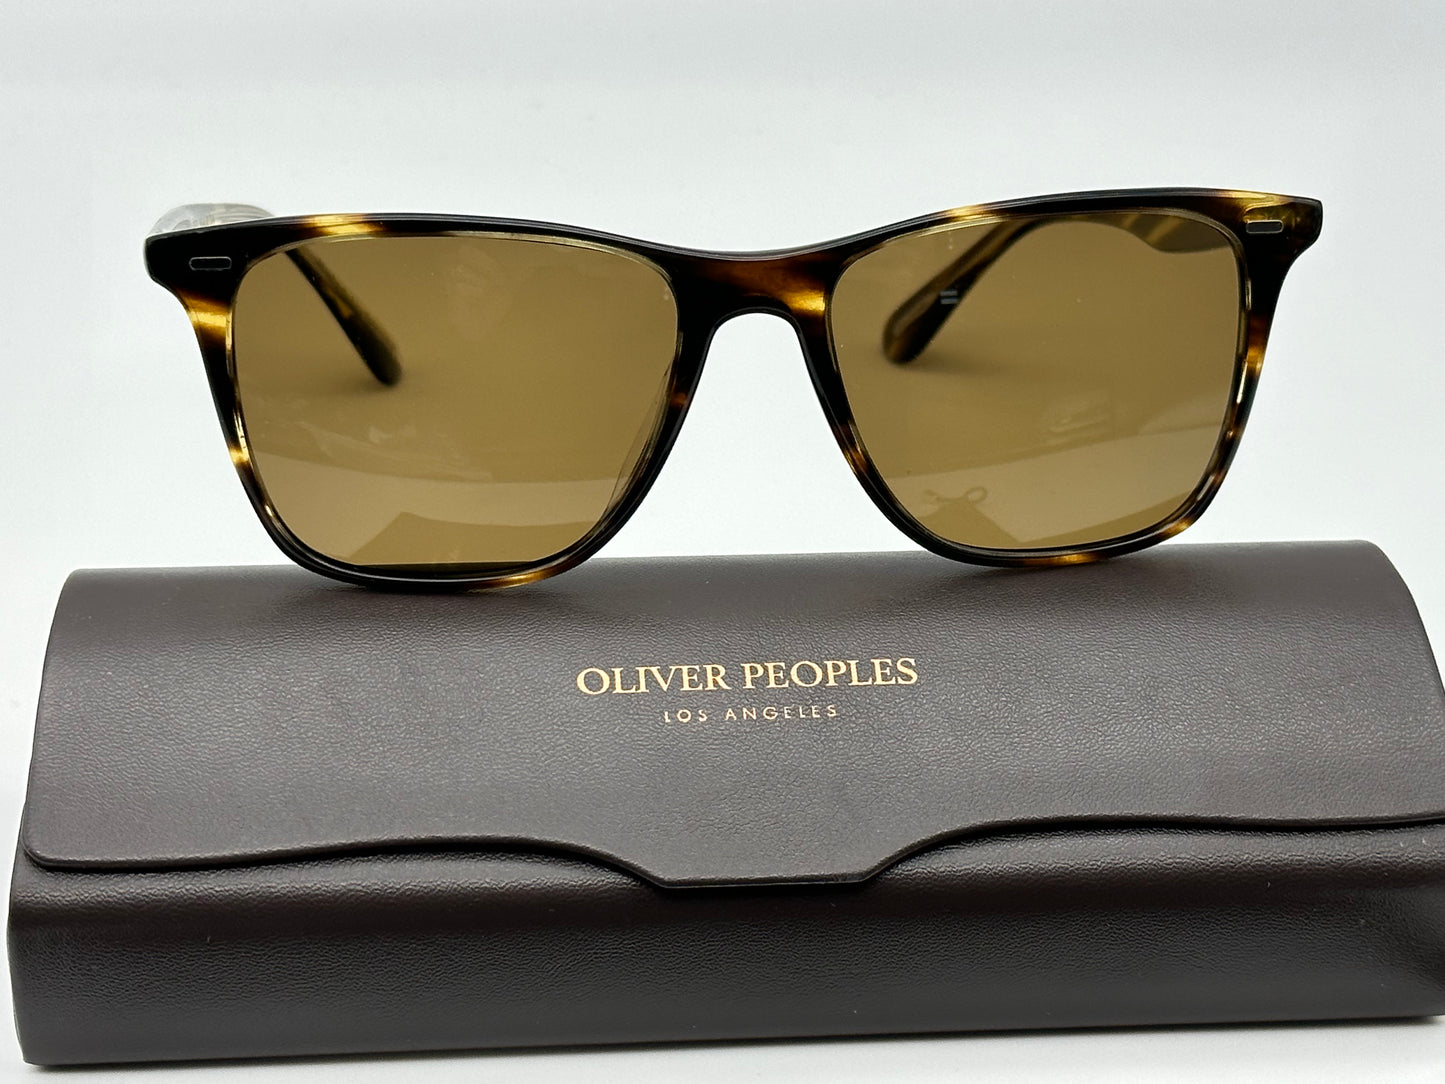 Oliver Peoples Ollis Sun 54mm OV 5437SU Cocobolo/True Brown Polarized 1003/57 made in Italy Sunglasses